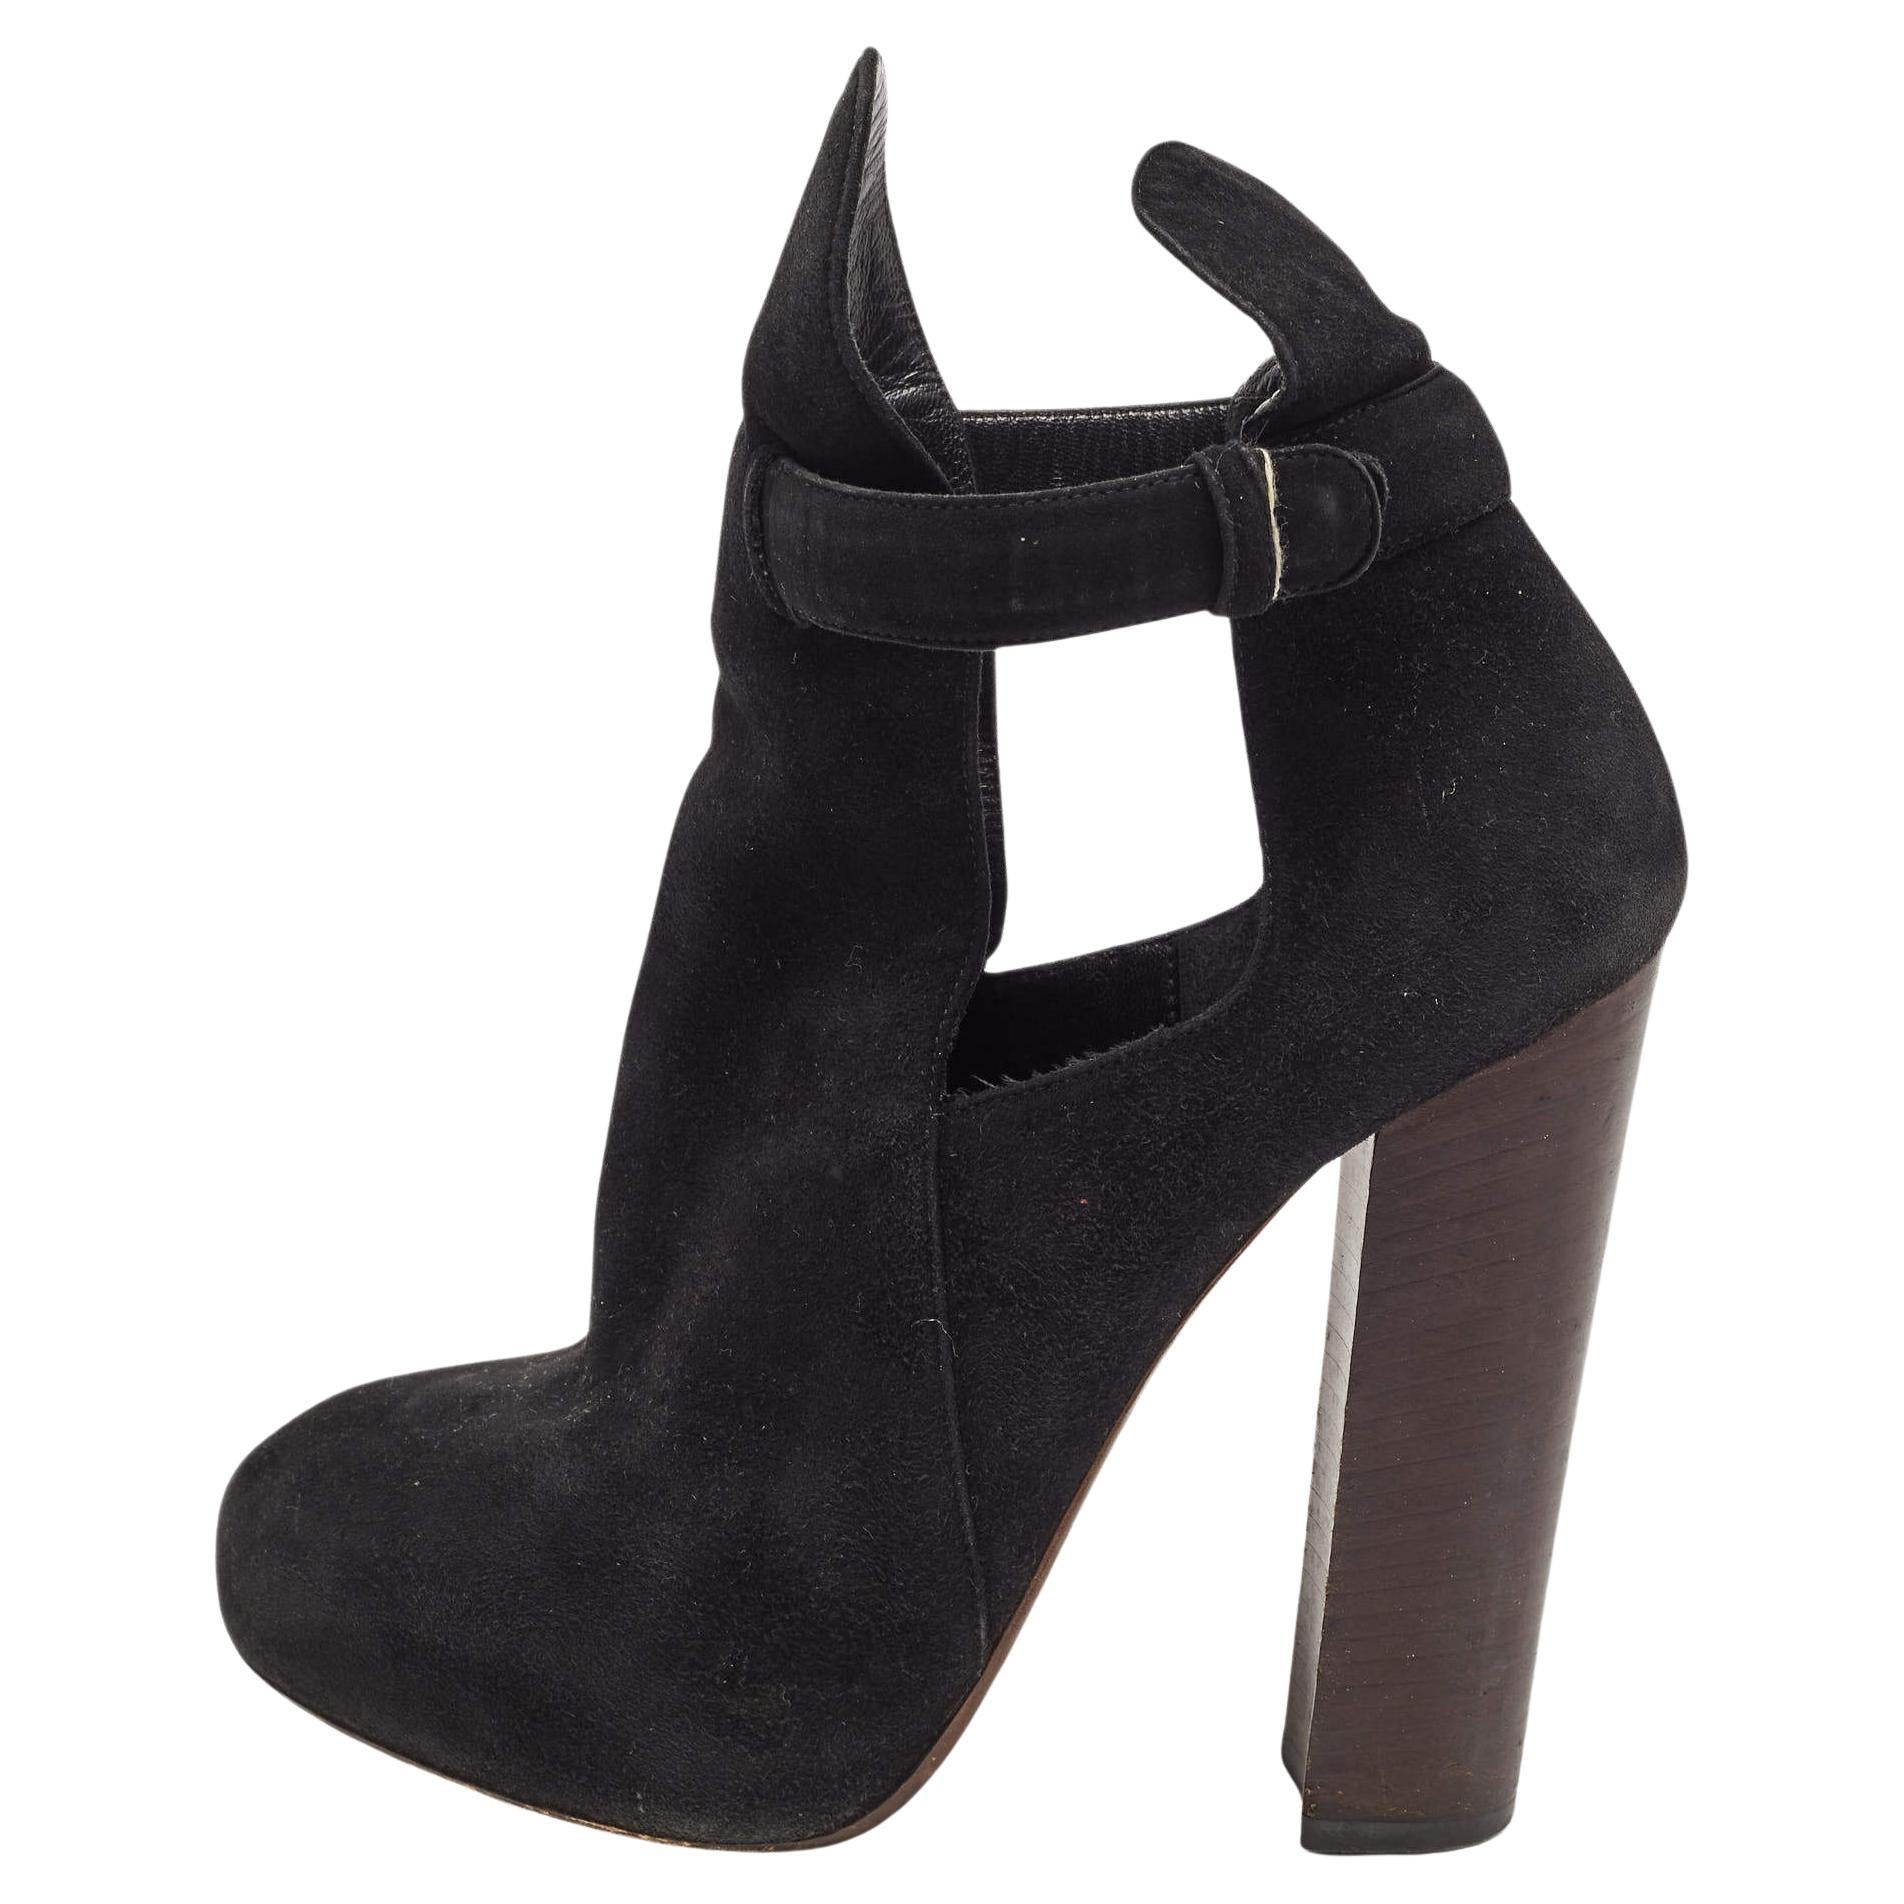 Celine Black Suede Platform Block Heel Ankle Booties Size 37 For Sale